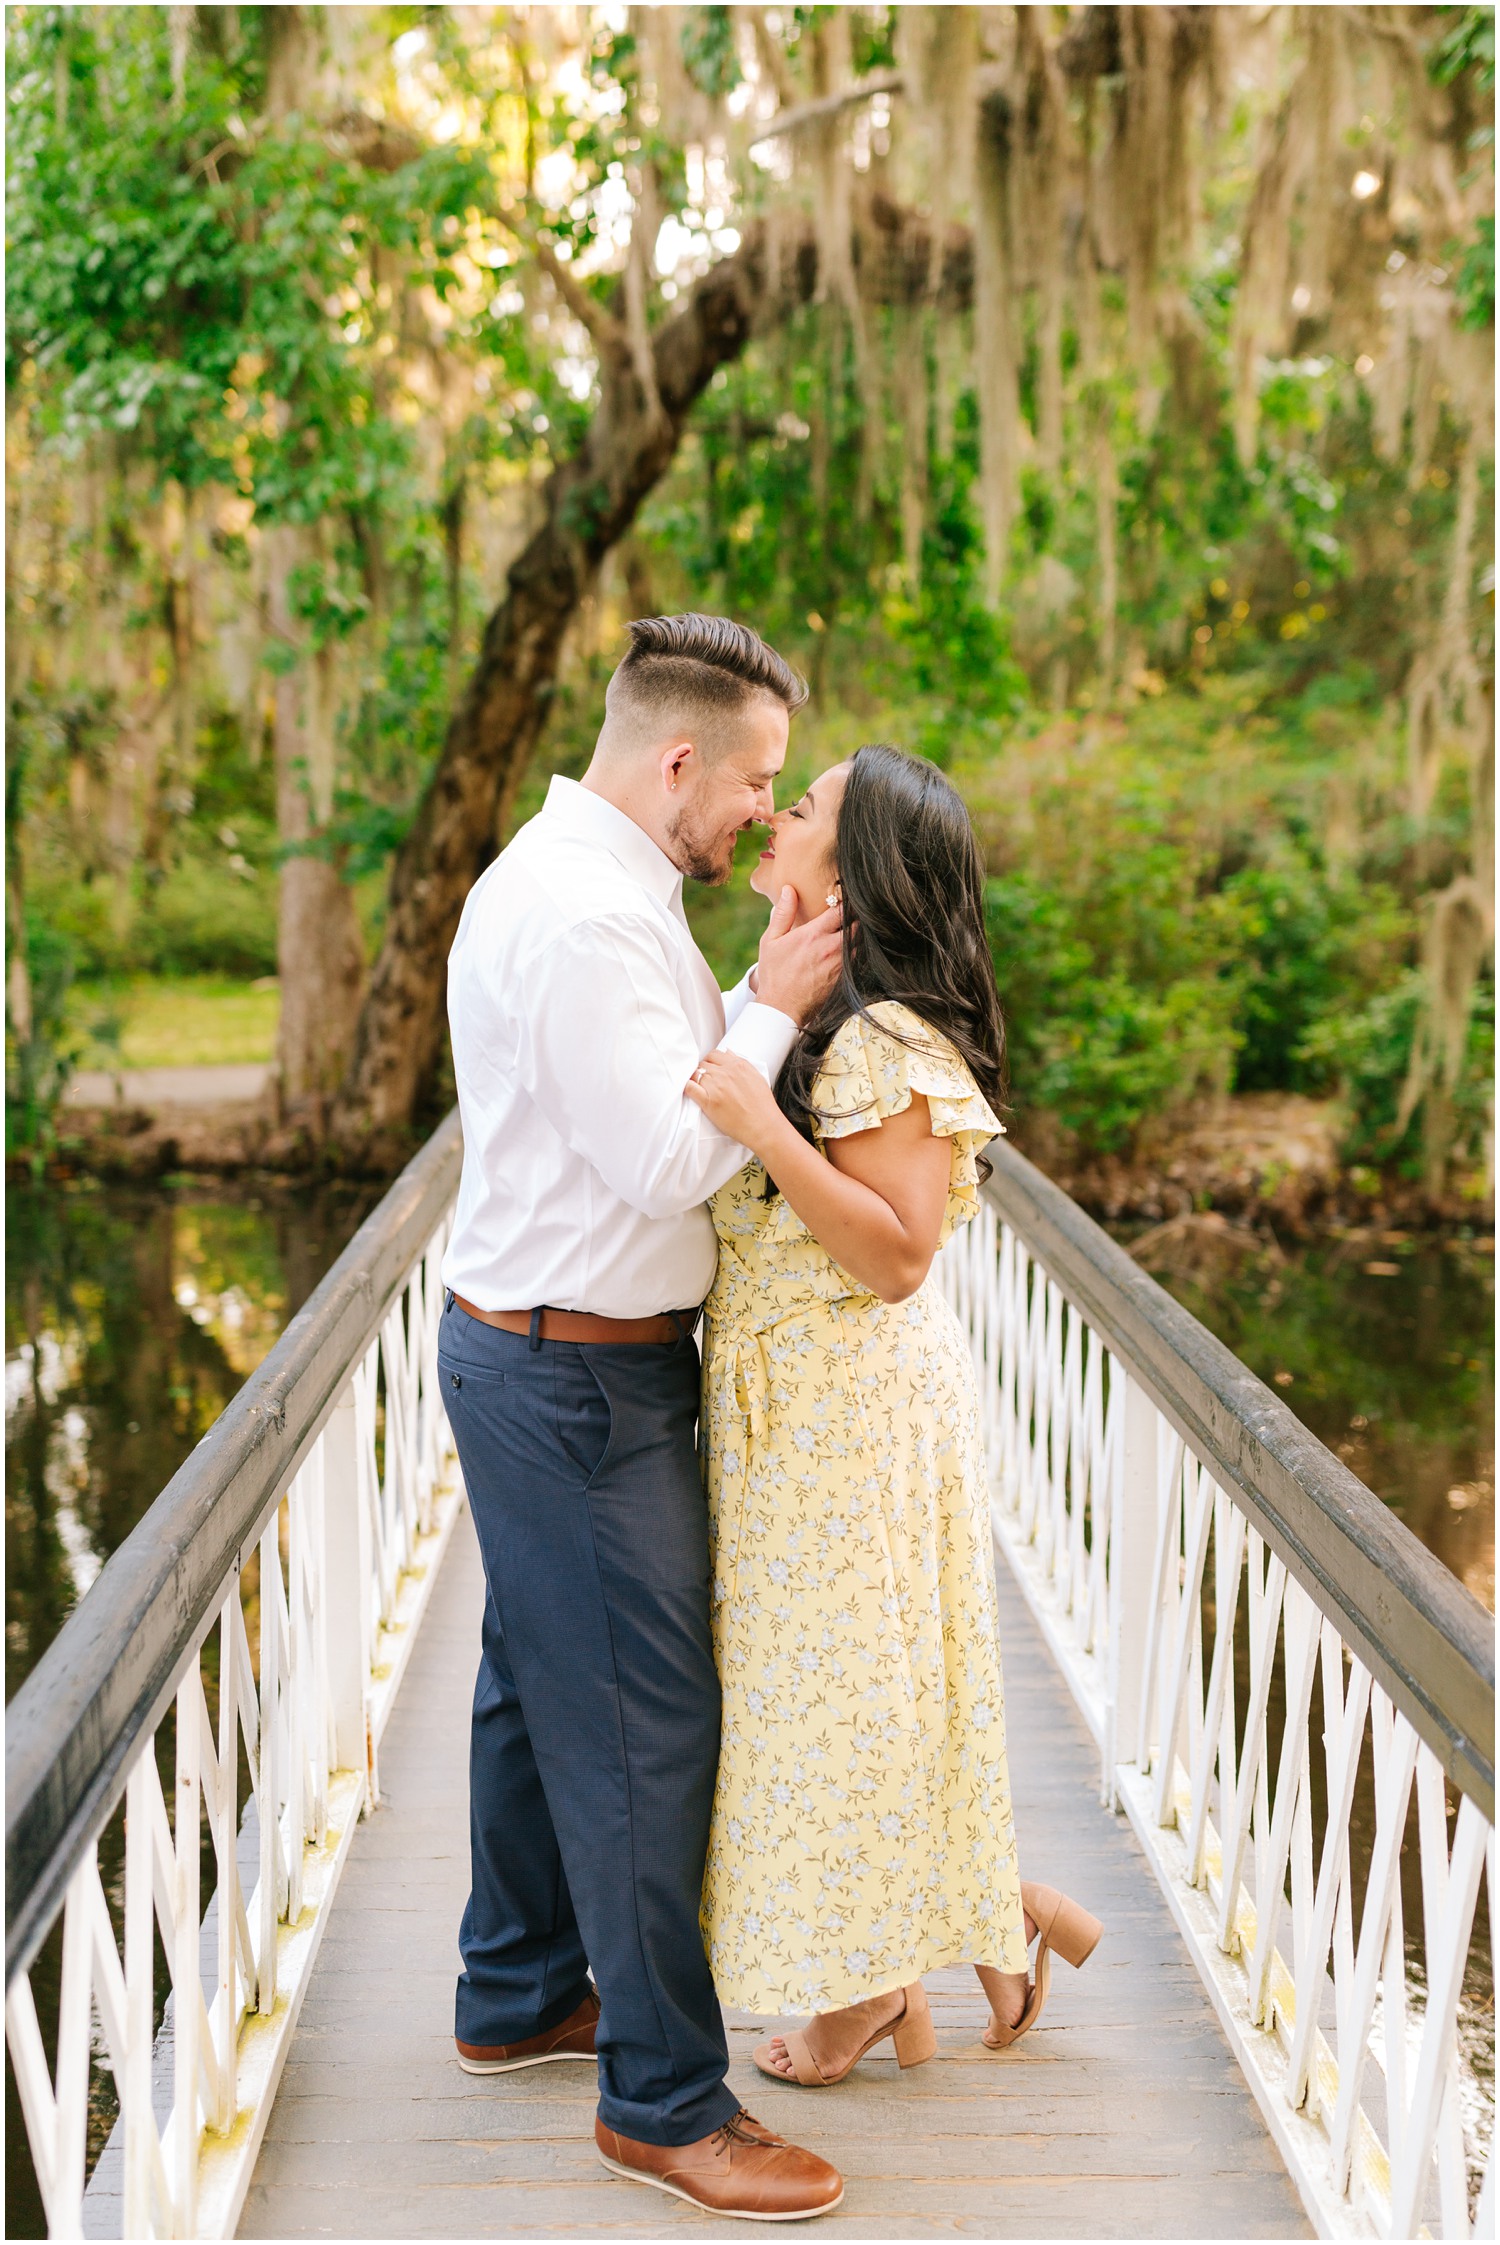 Destination-Wedding-Photographer_Magnolia-Plantation-Engagement-Session_Jess-and-Justin_Charleston-South-Carolina_0027.jpg